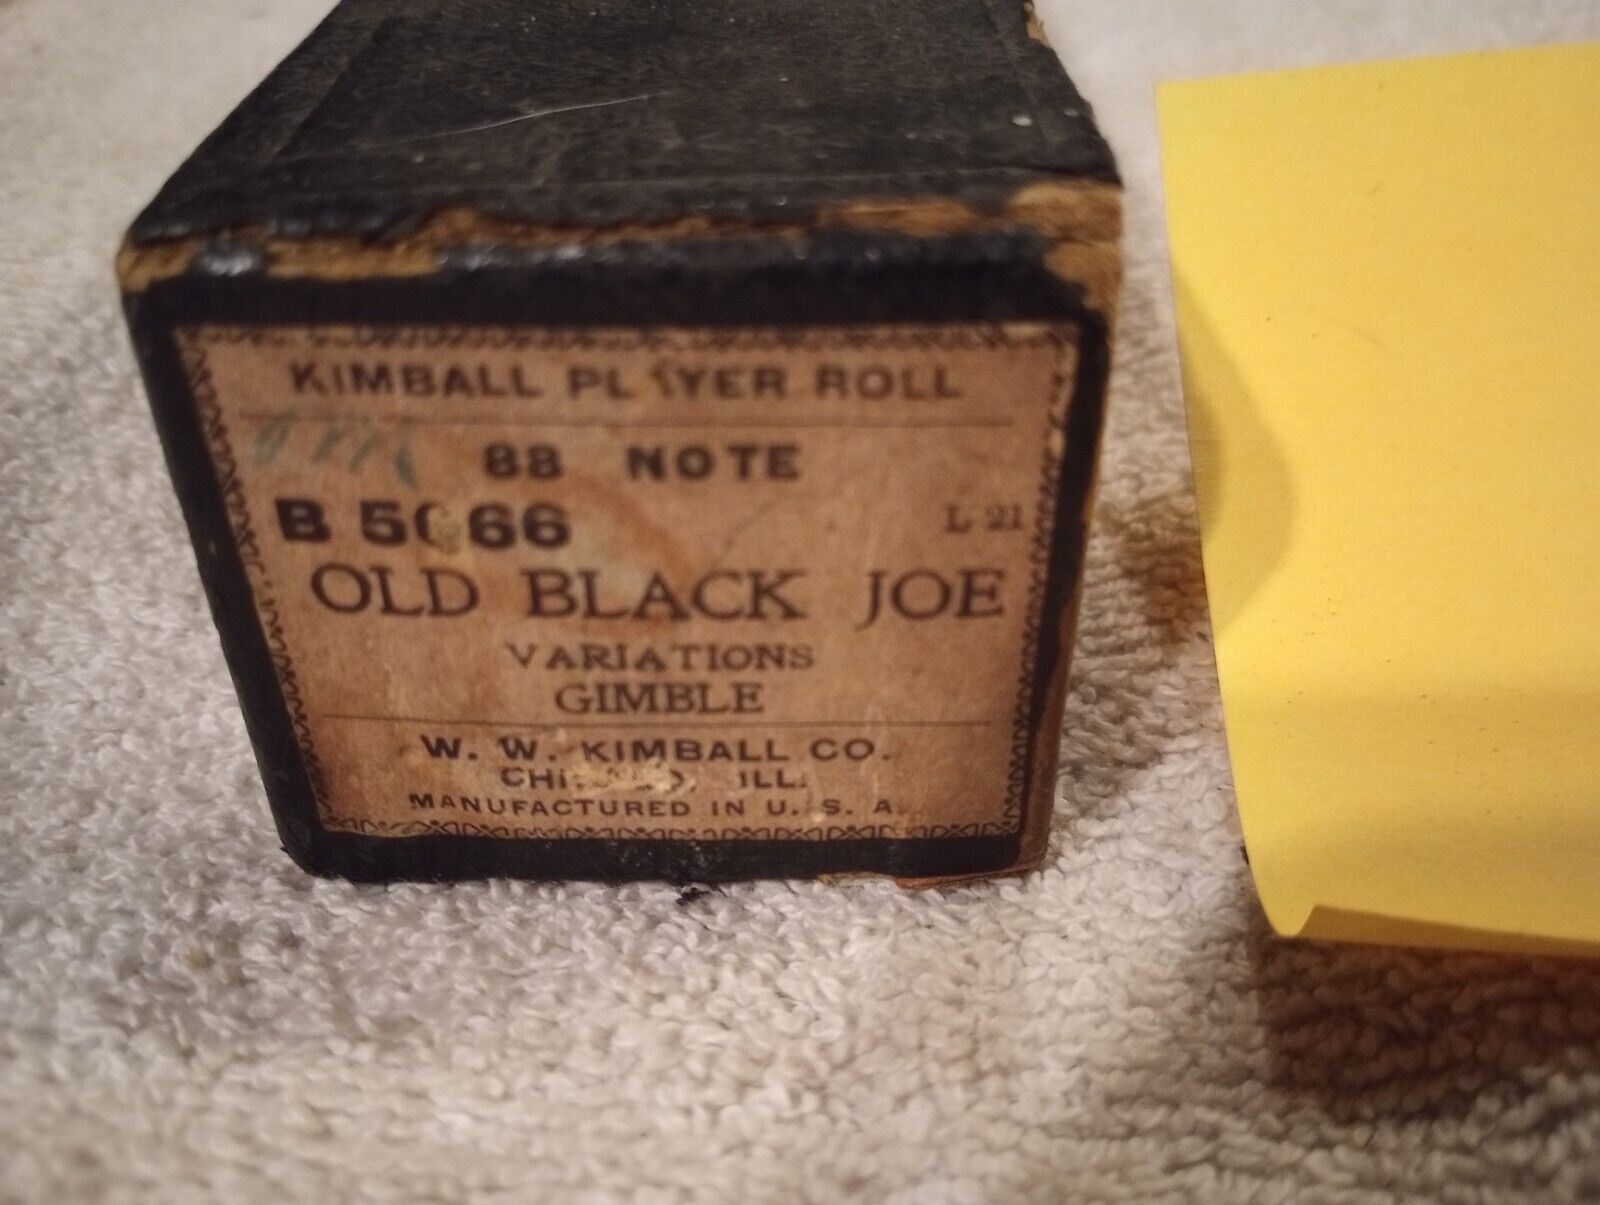 Vintage 88 Note Kimball Player Piano Roll #B 5066 Old Black Joe Good Shape